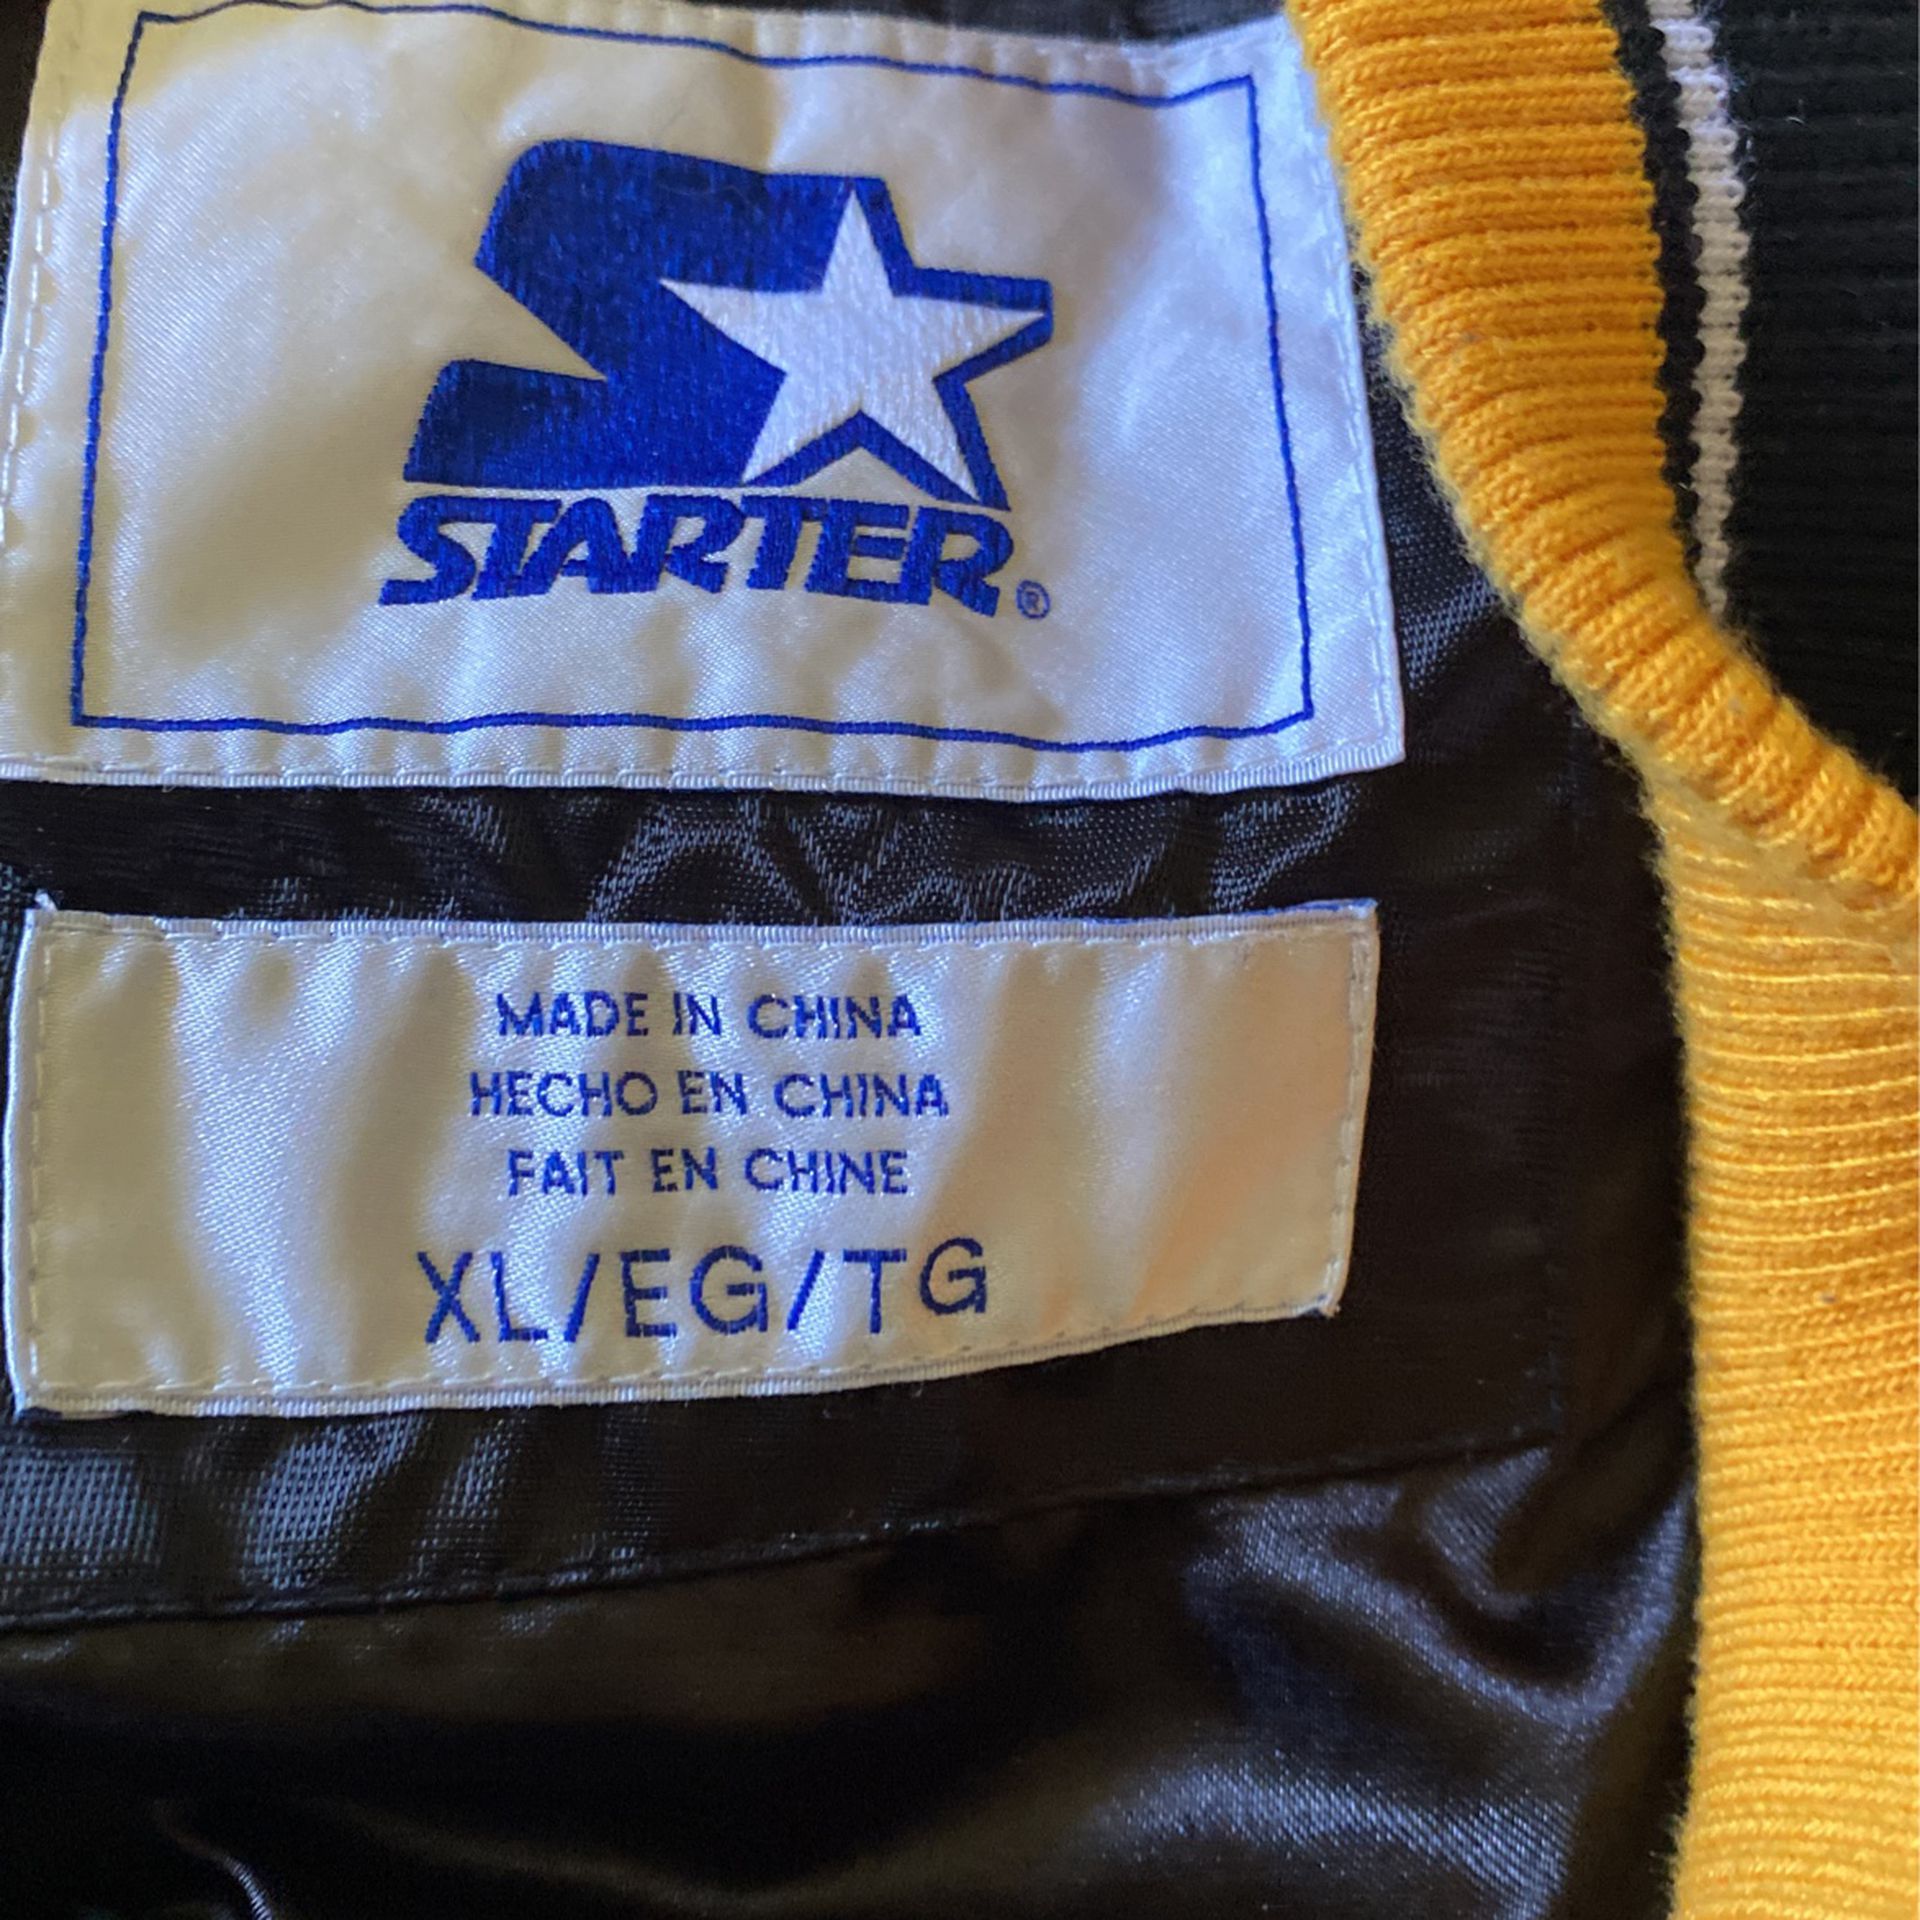 Vintage Starter Boston Bruins Quarter Zip Jacket for Sale in San Fernando,  CA - OfferUp